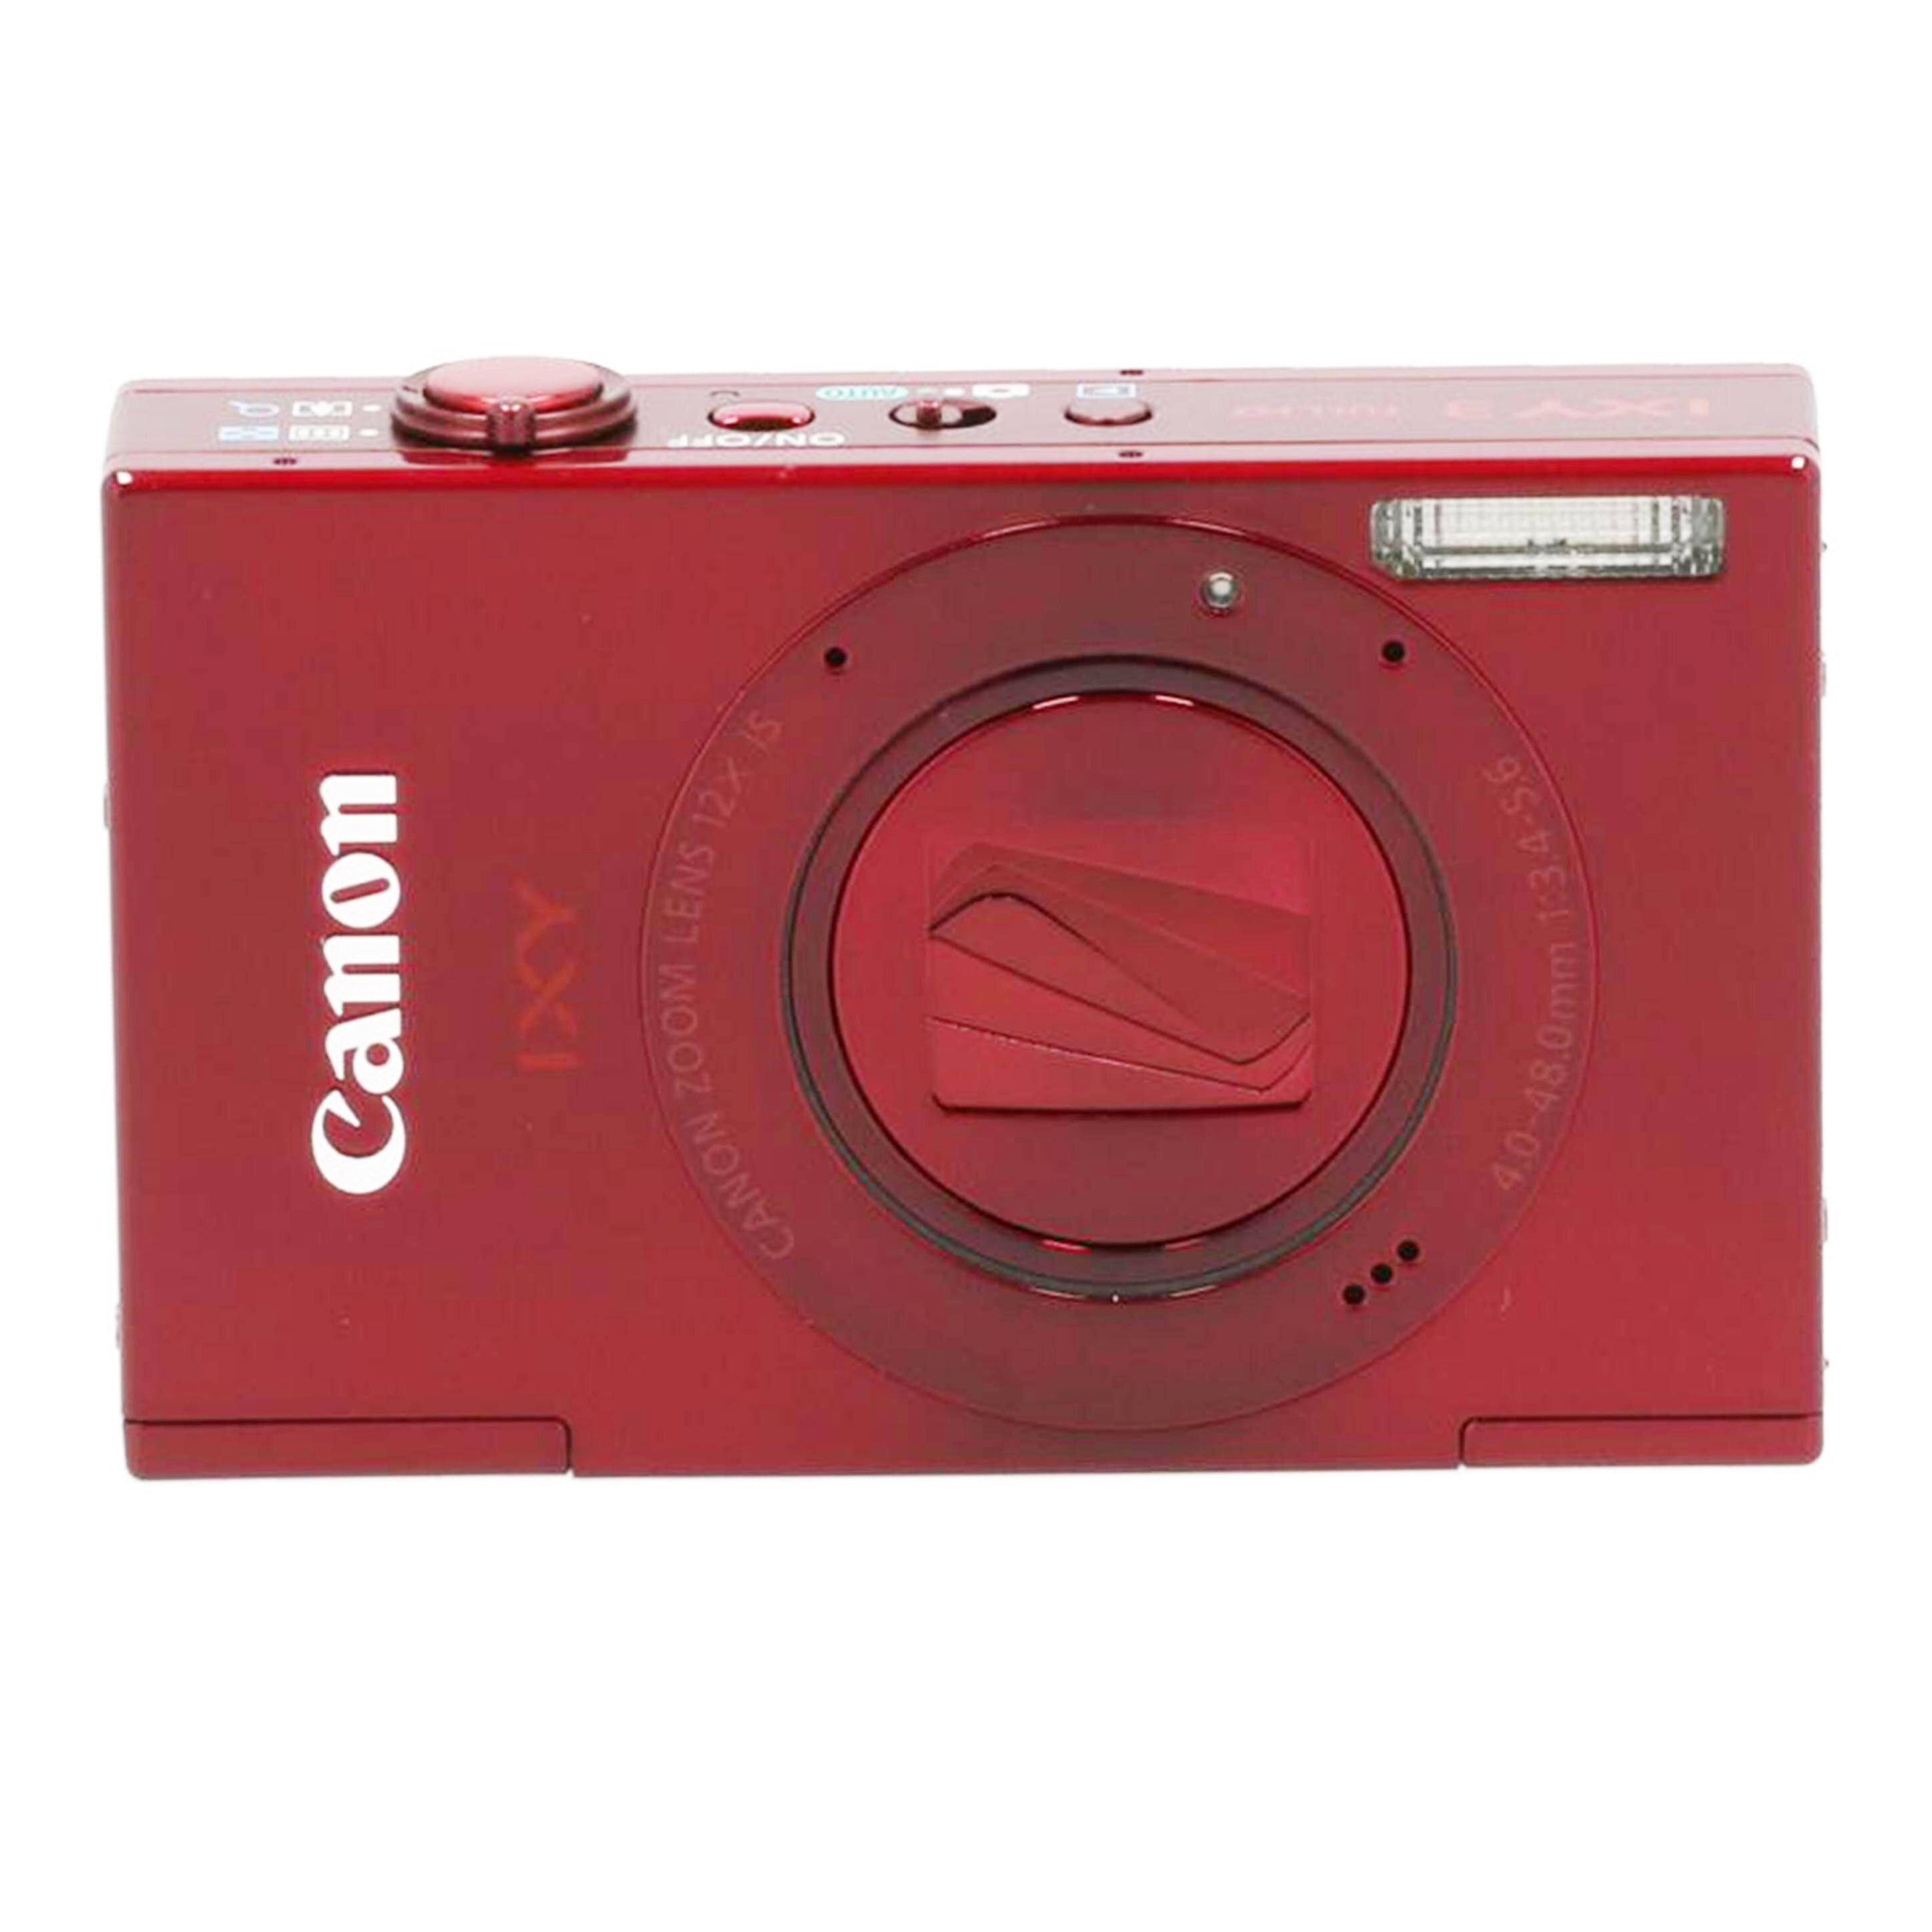 Canon キヤノン/デジタルカメラ/IXY 3/21681032004638/デジタルカメラ/Bランク/82【中古】